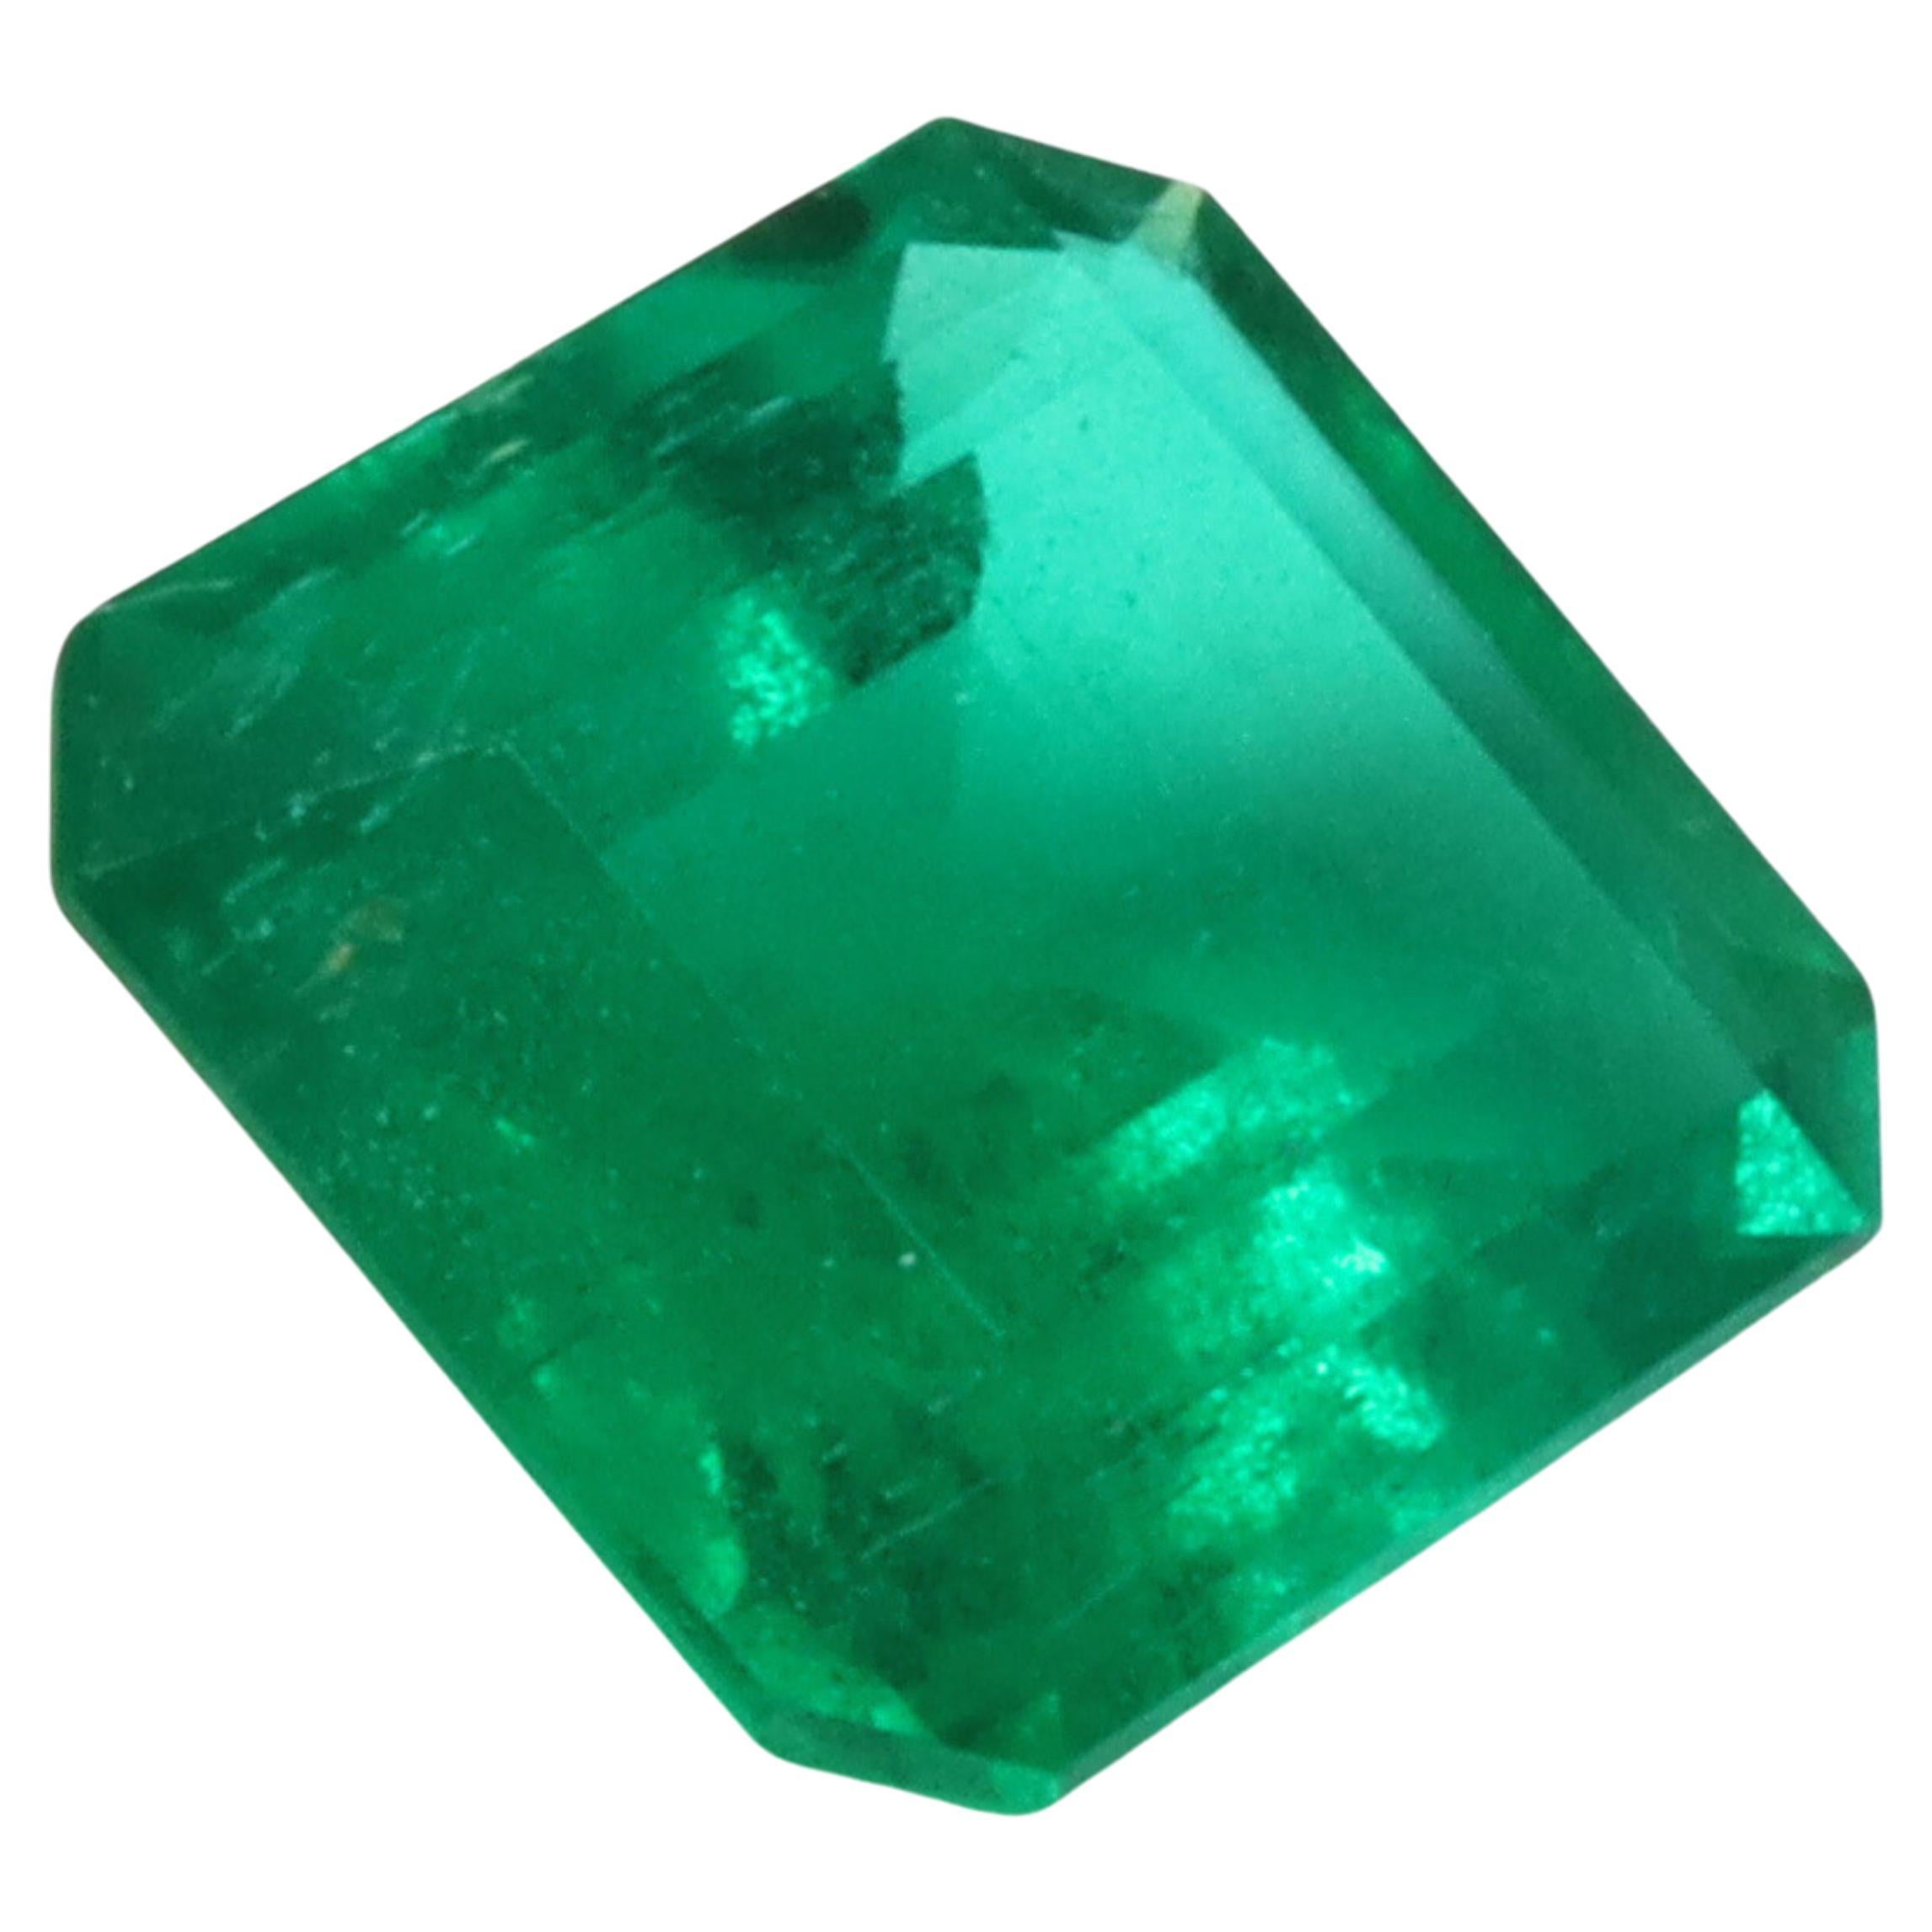 Certified Vivid green Emerald - Minor Oil - 1.56ct